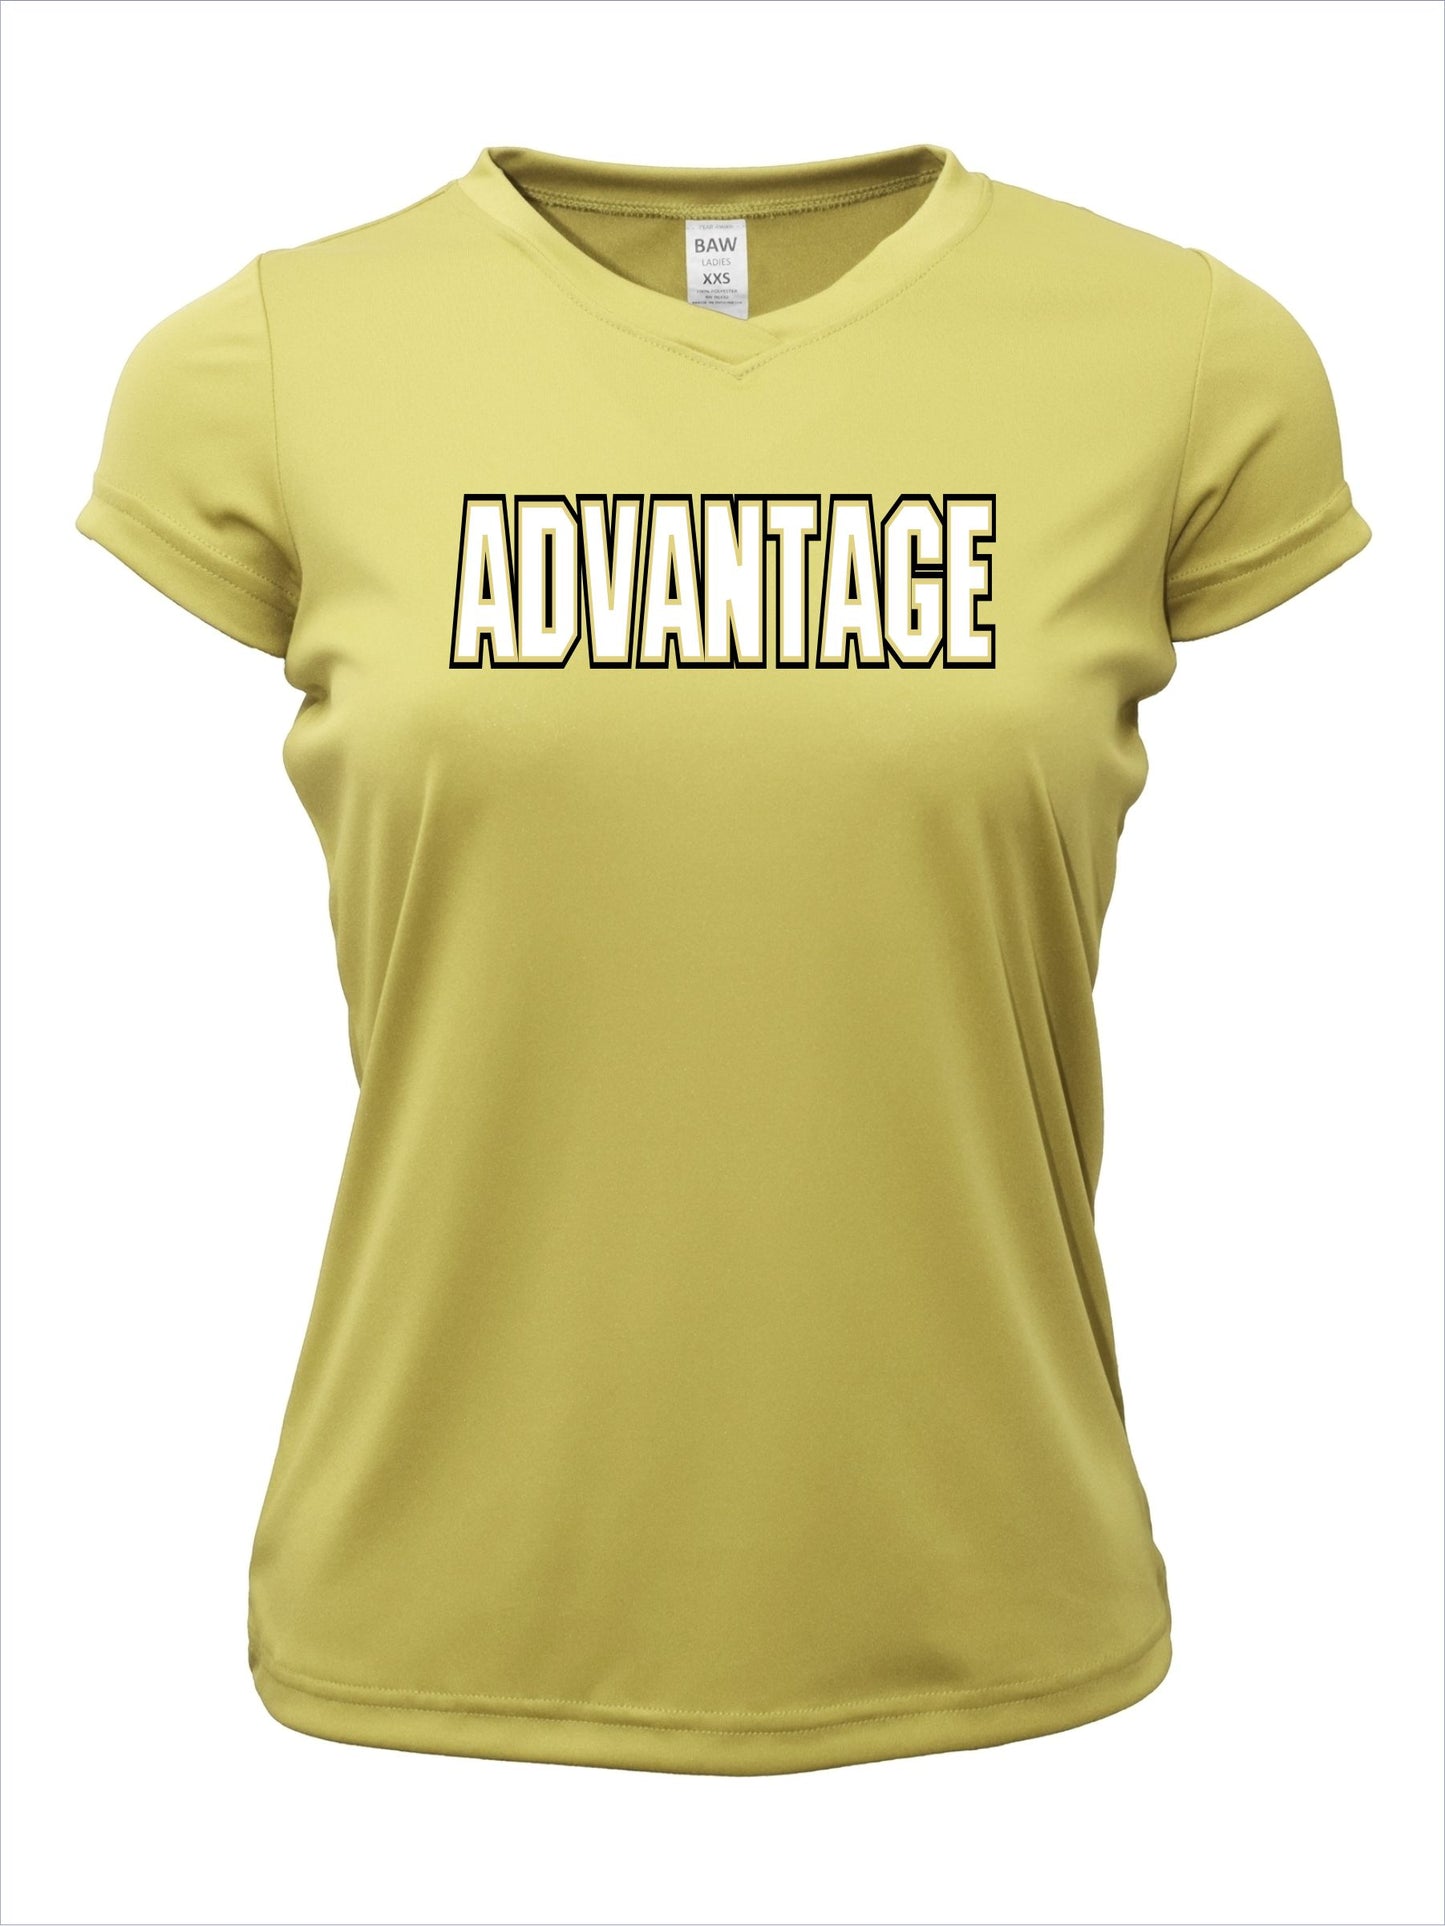 Ladies V-Neck "Advantage" Dri-Fit T-Shirt